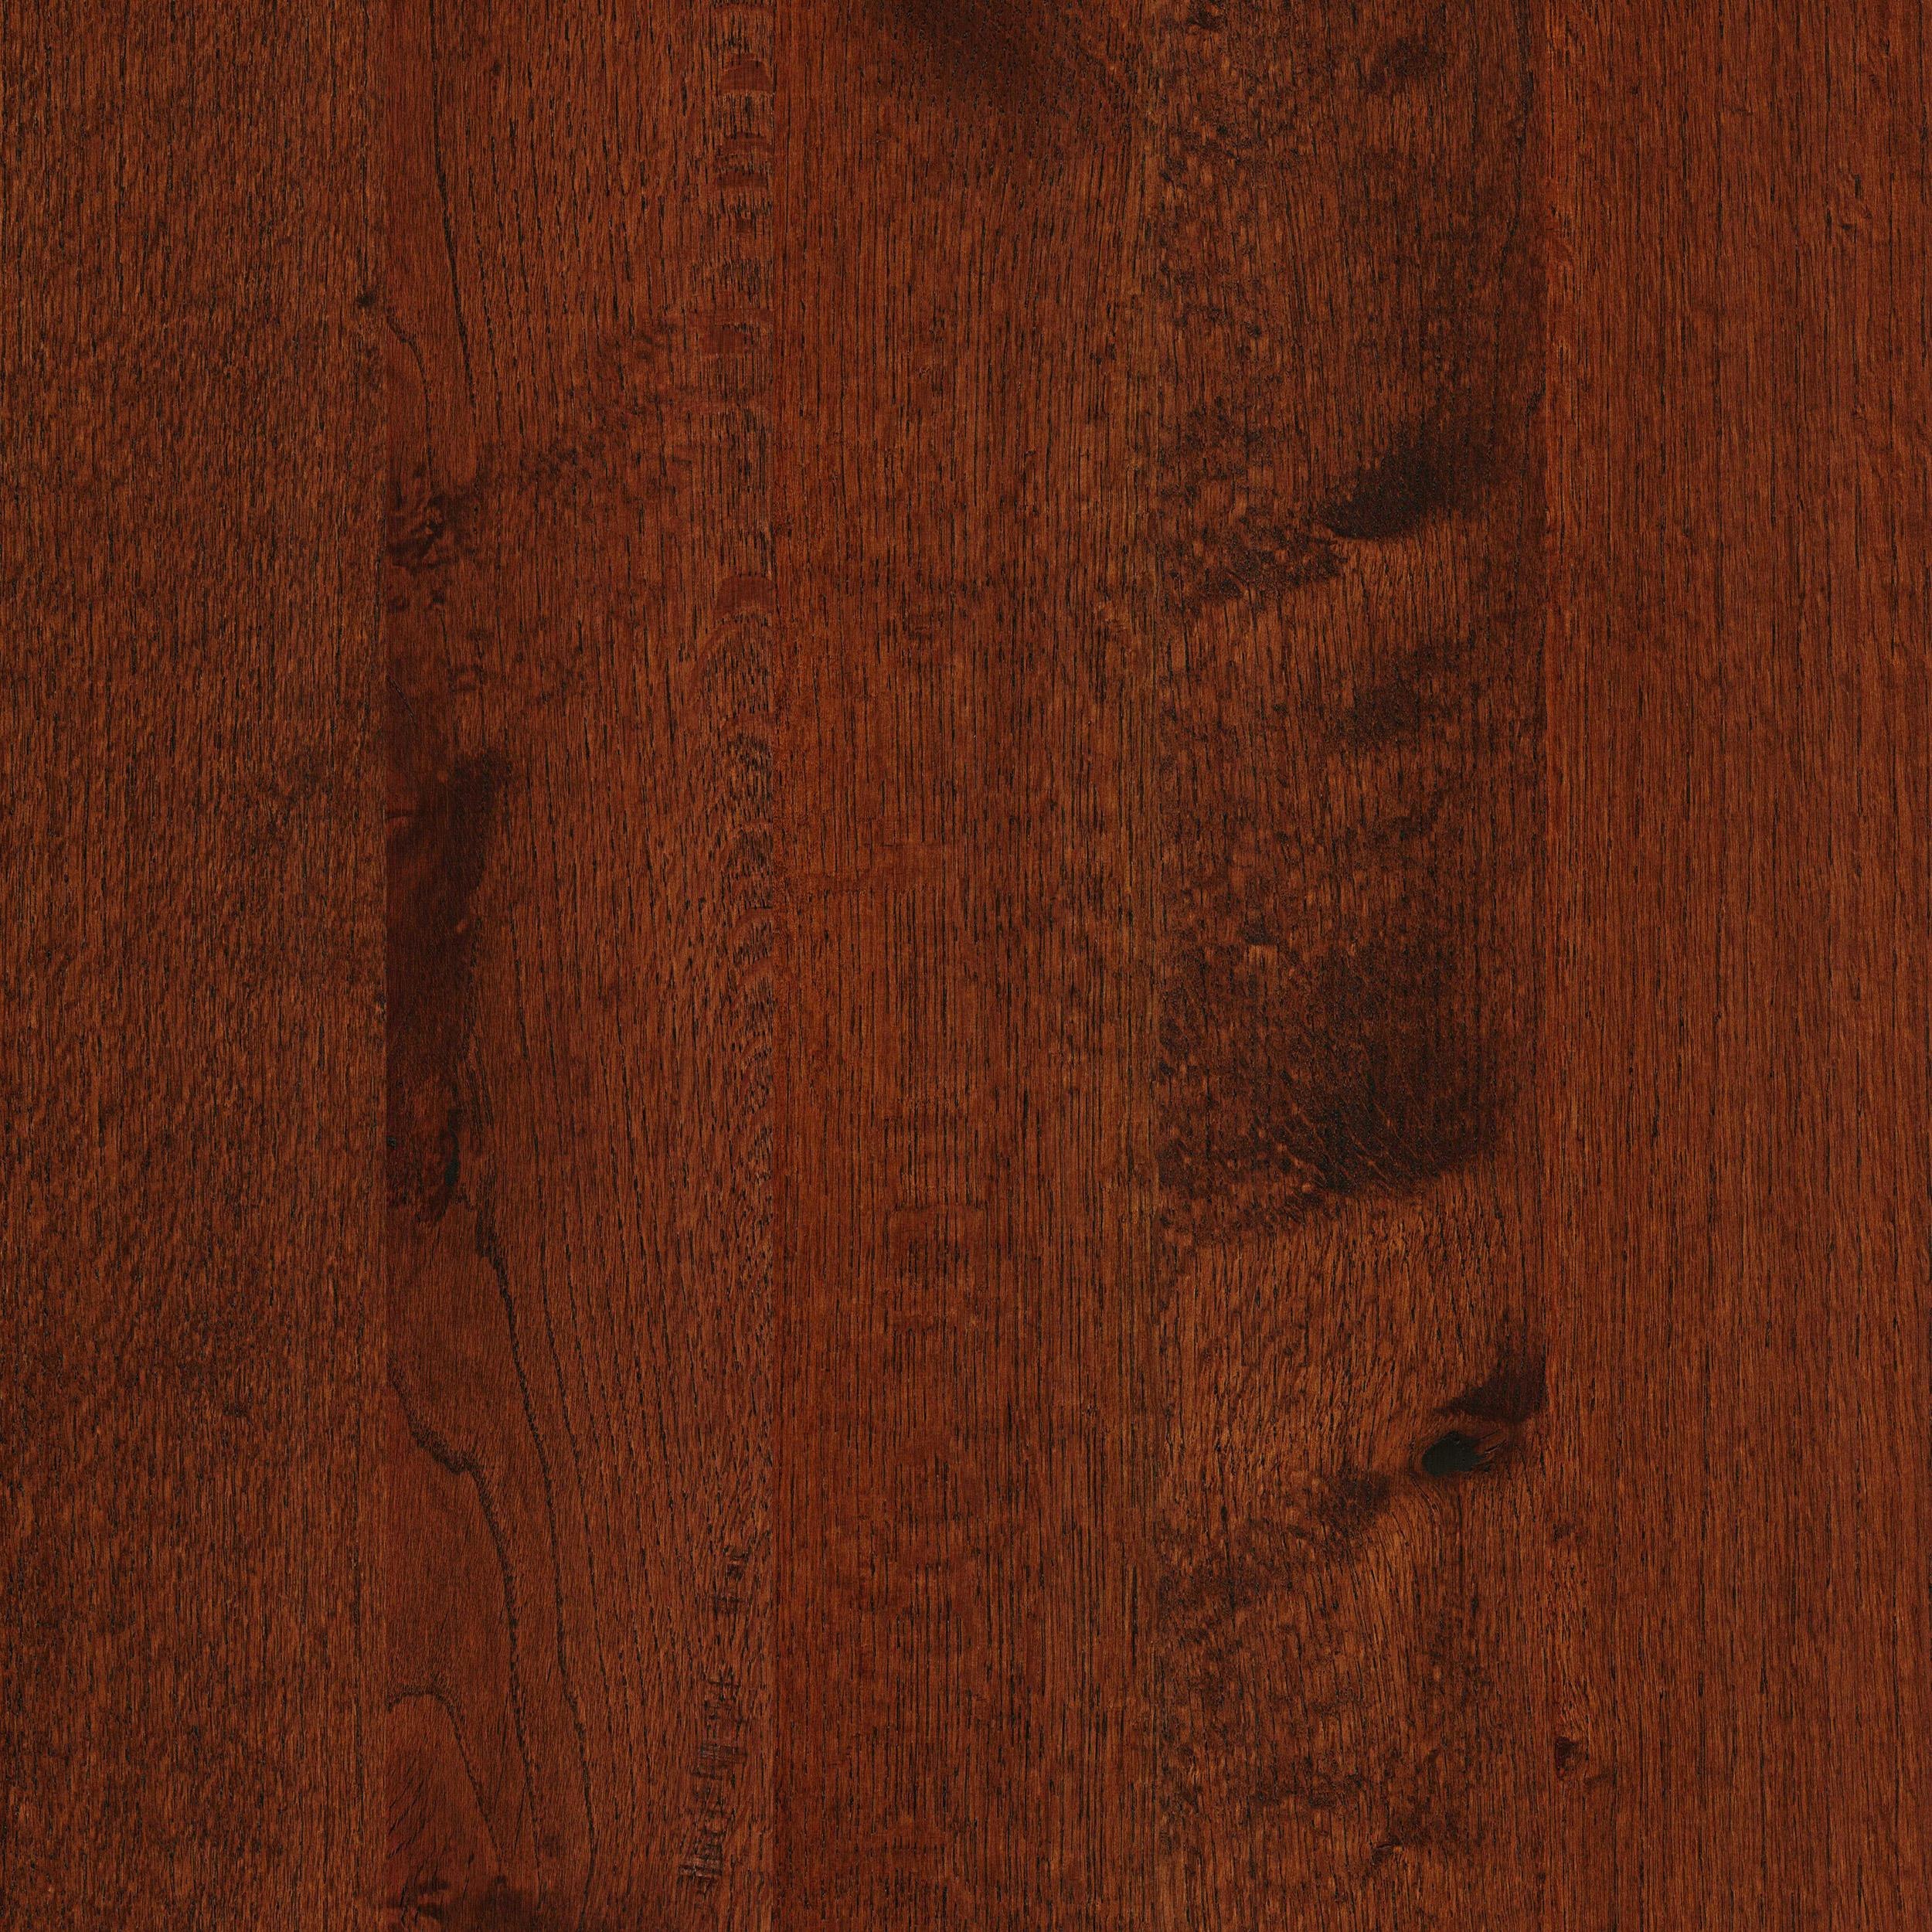 2 1 4 inch oak hardwood flooring of timber hardwood red oak sorrell 5 wide solid hardwood flooring throughout red oak sorrell timber solid approved bk